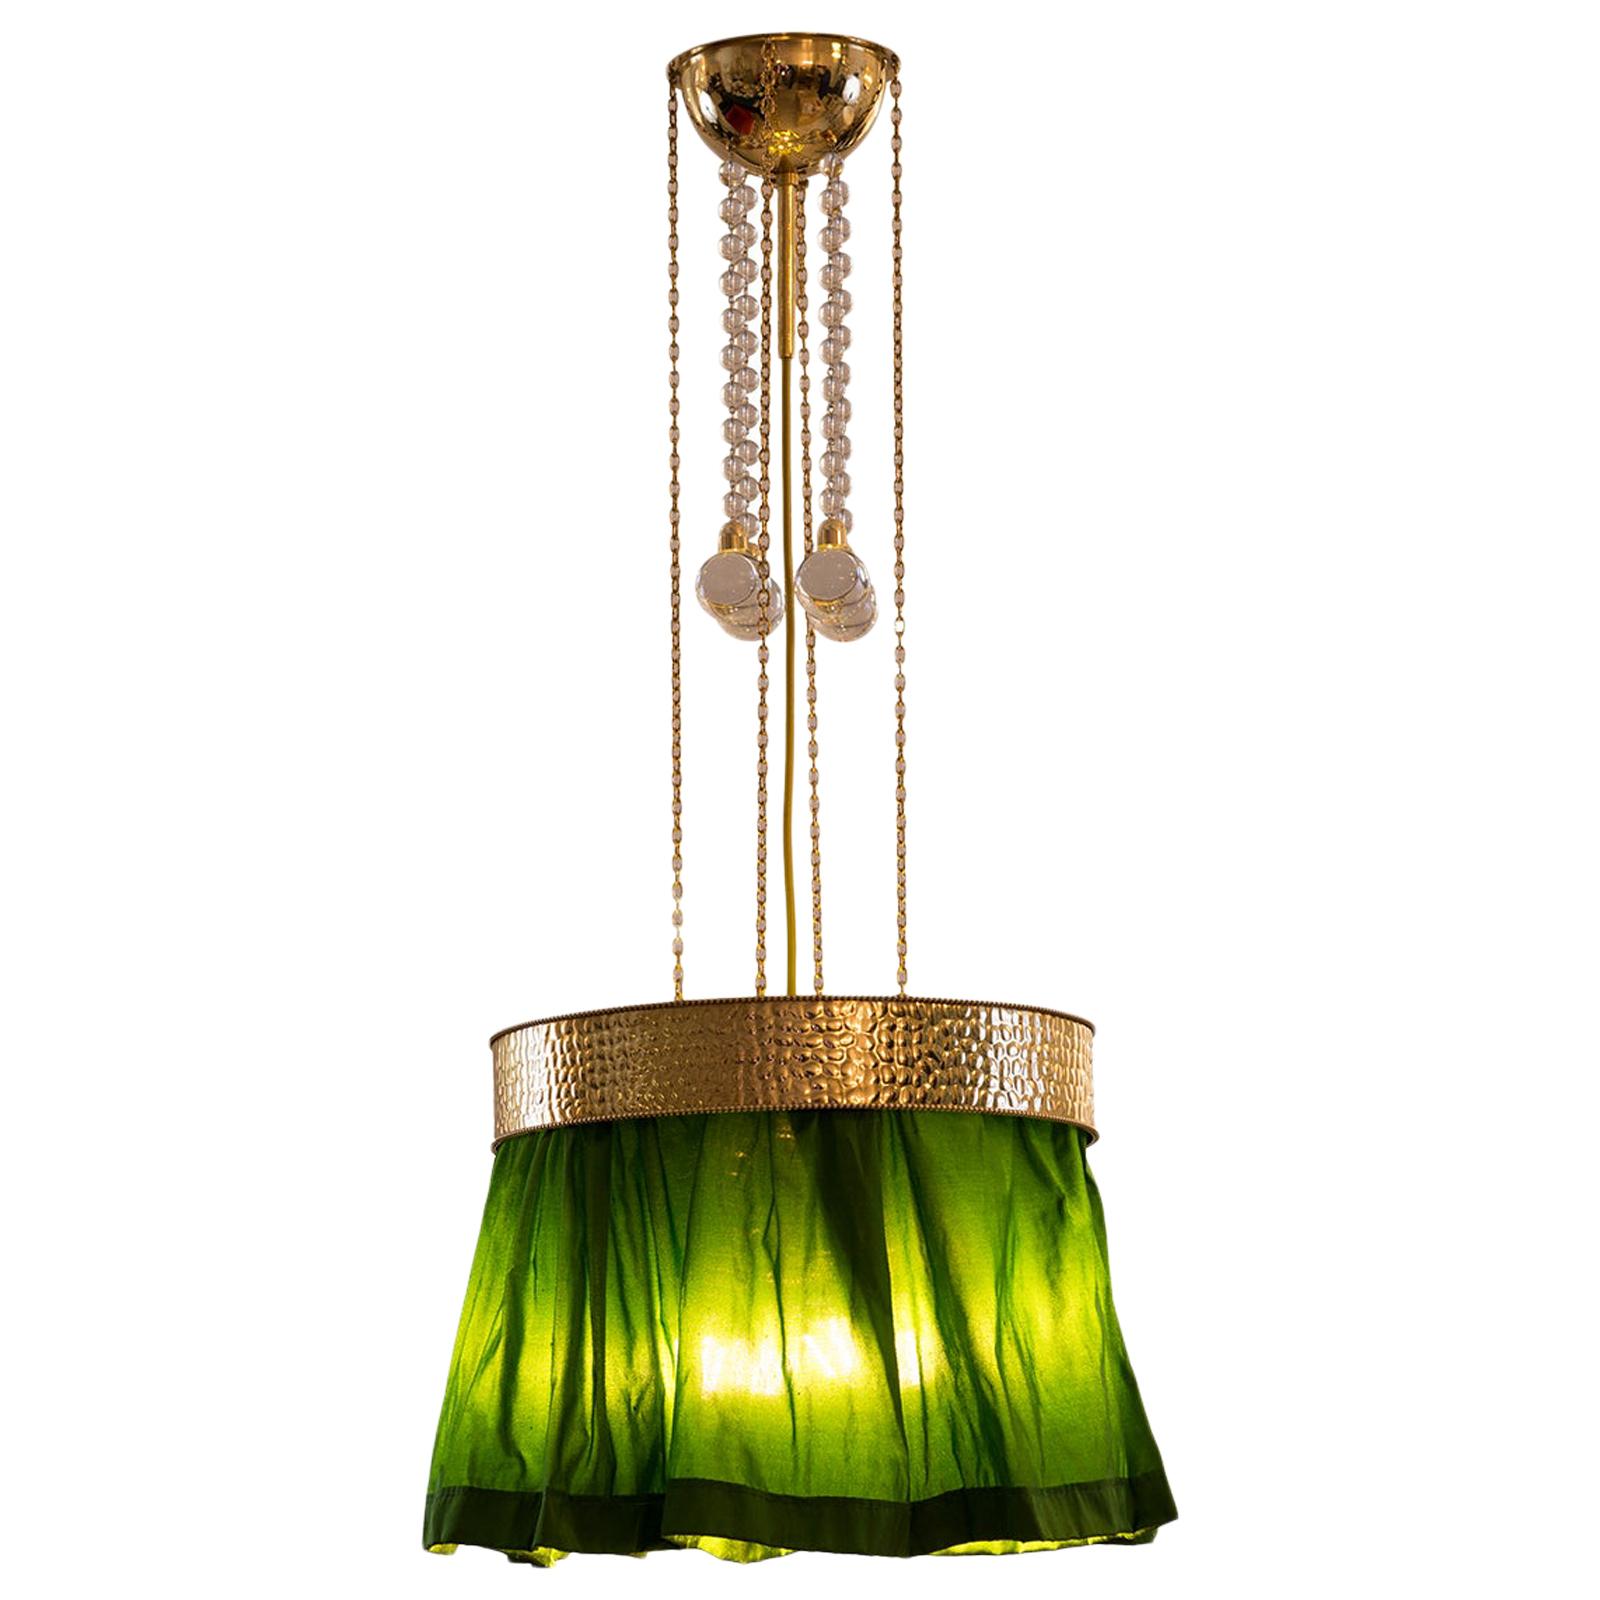 Josef Hoffmann & Wiener Werkstaette Hanging Lamp Chandelier, Pendant, Re-Edition